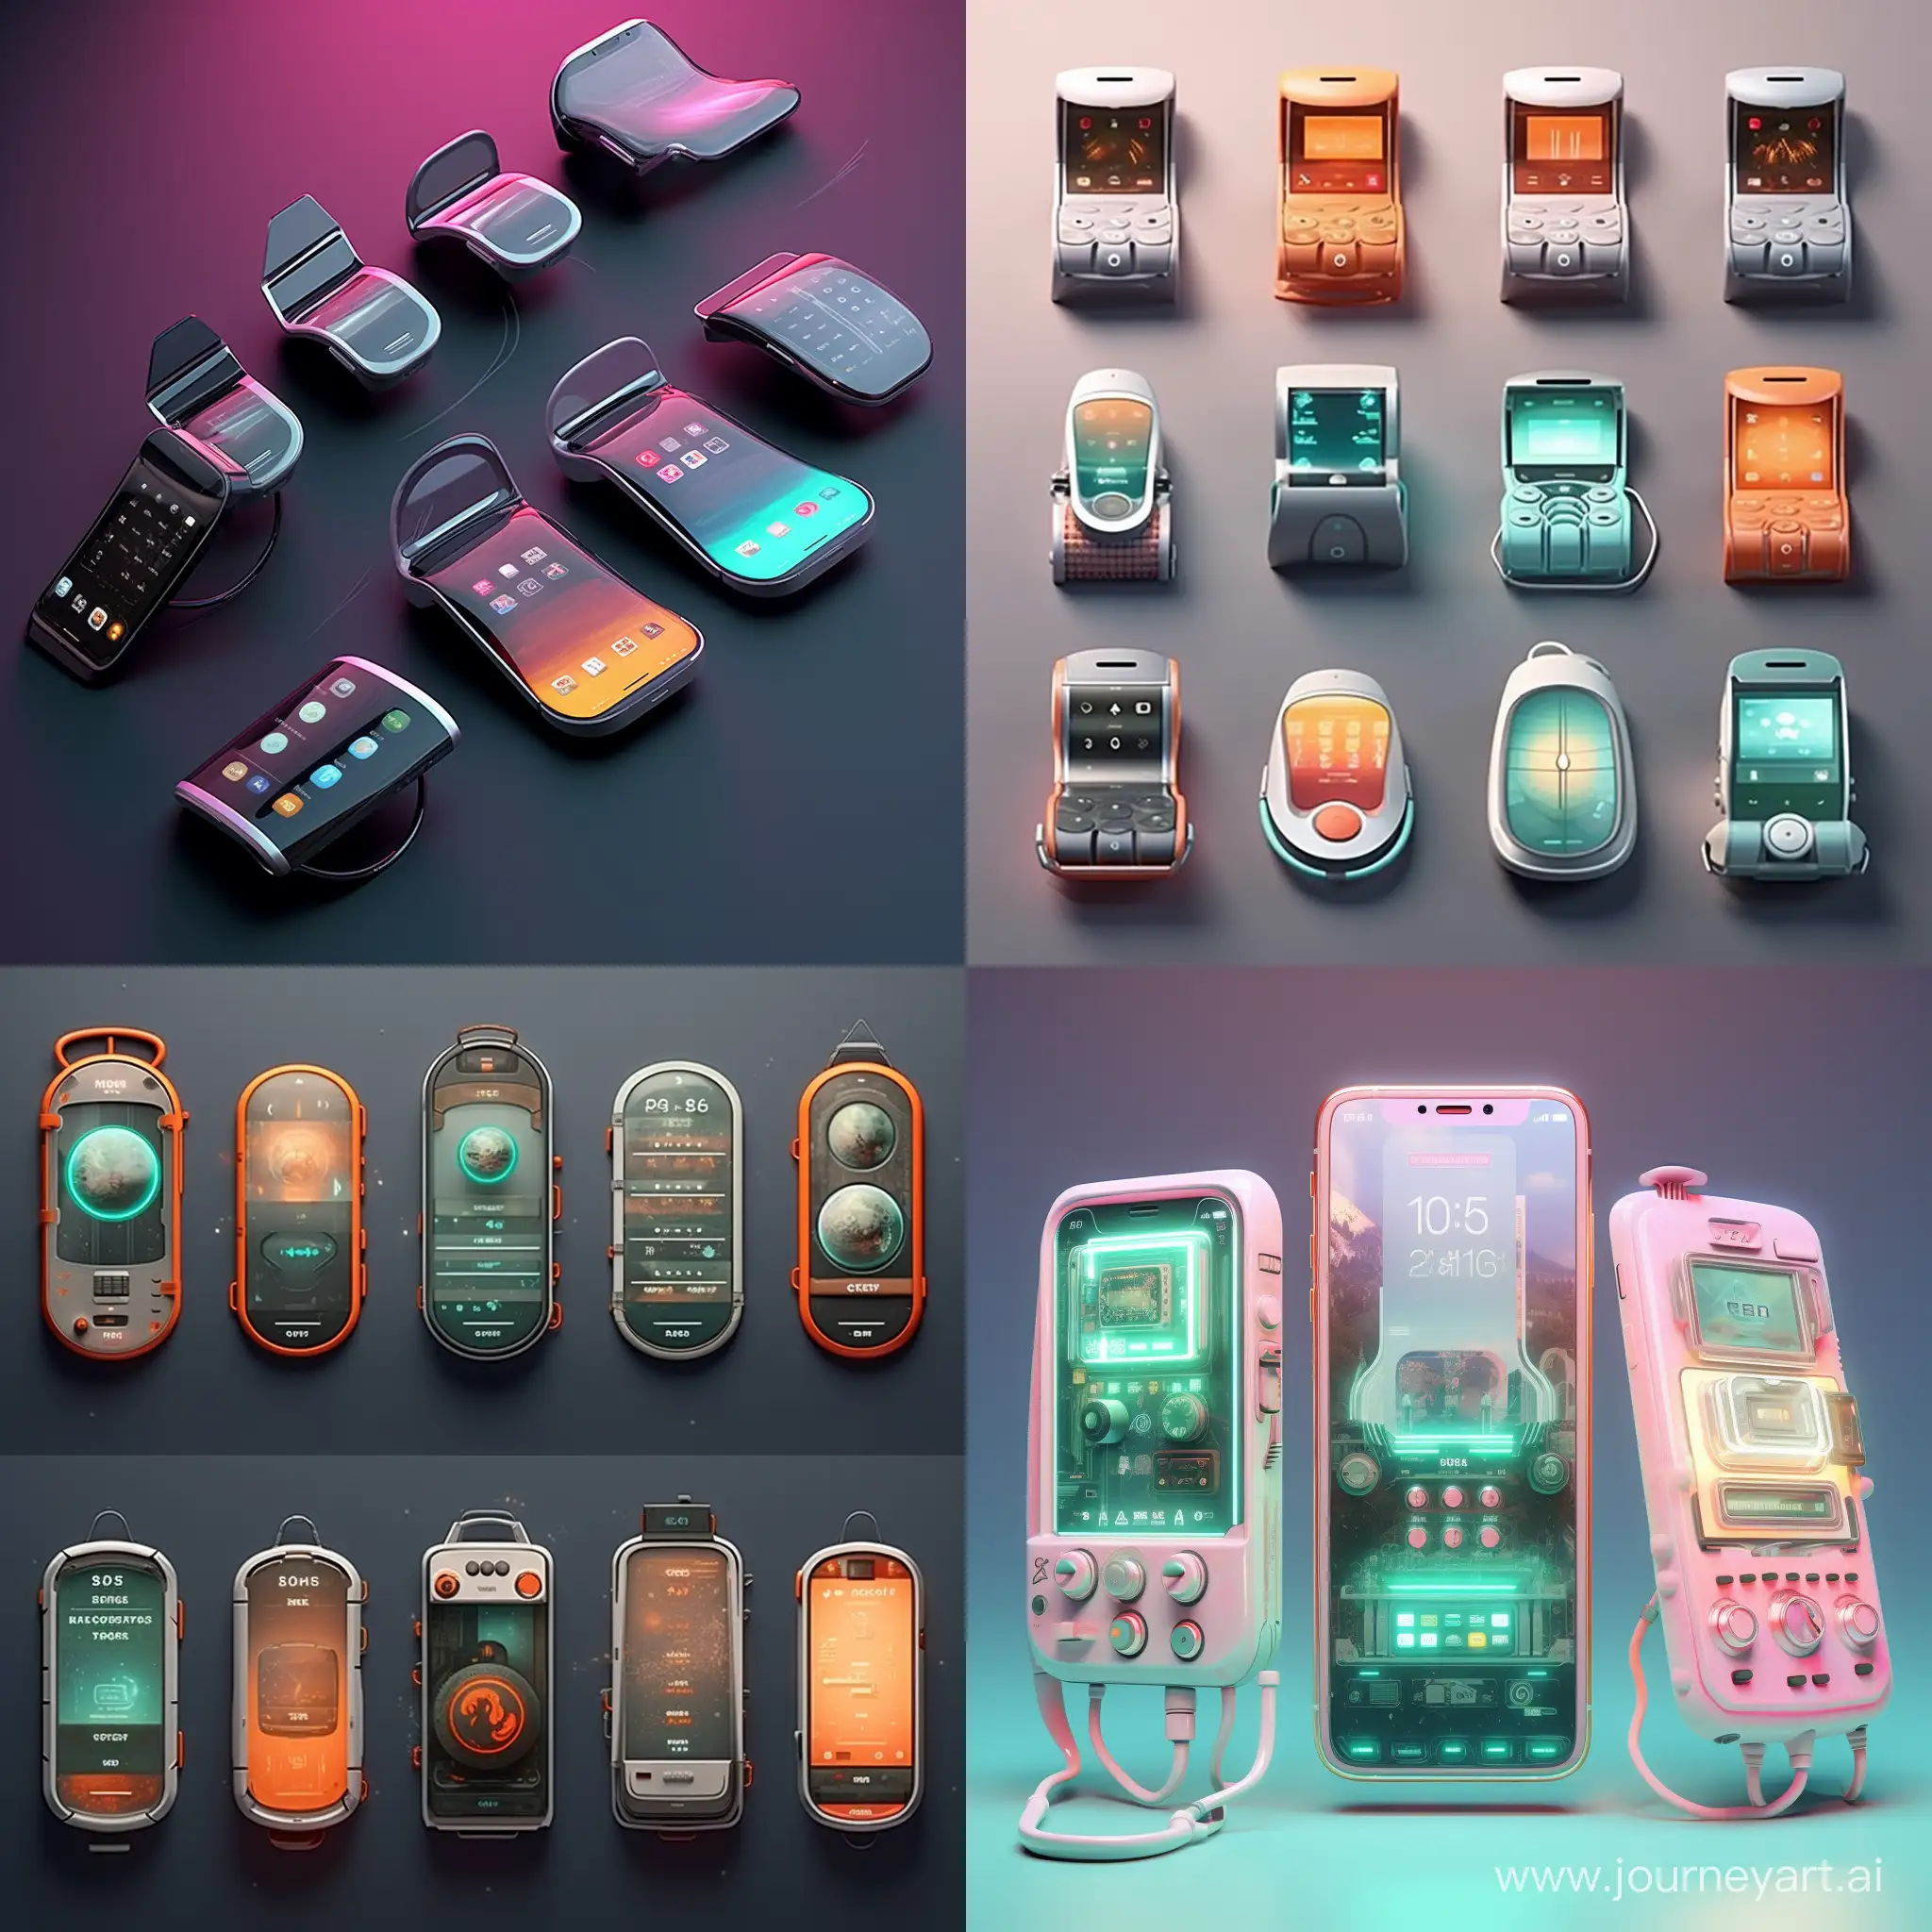 Futuristic-11-Aspect-Ratio-Phone-Styles-AR-11-Technology-Showcase